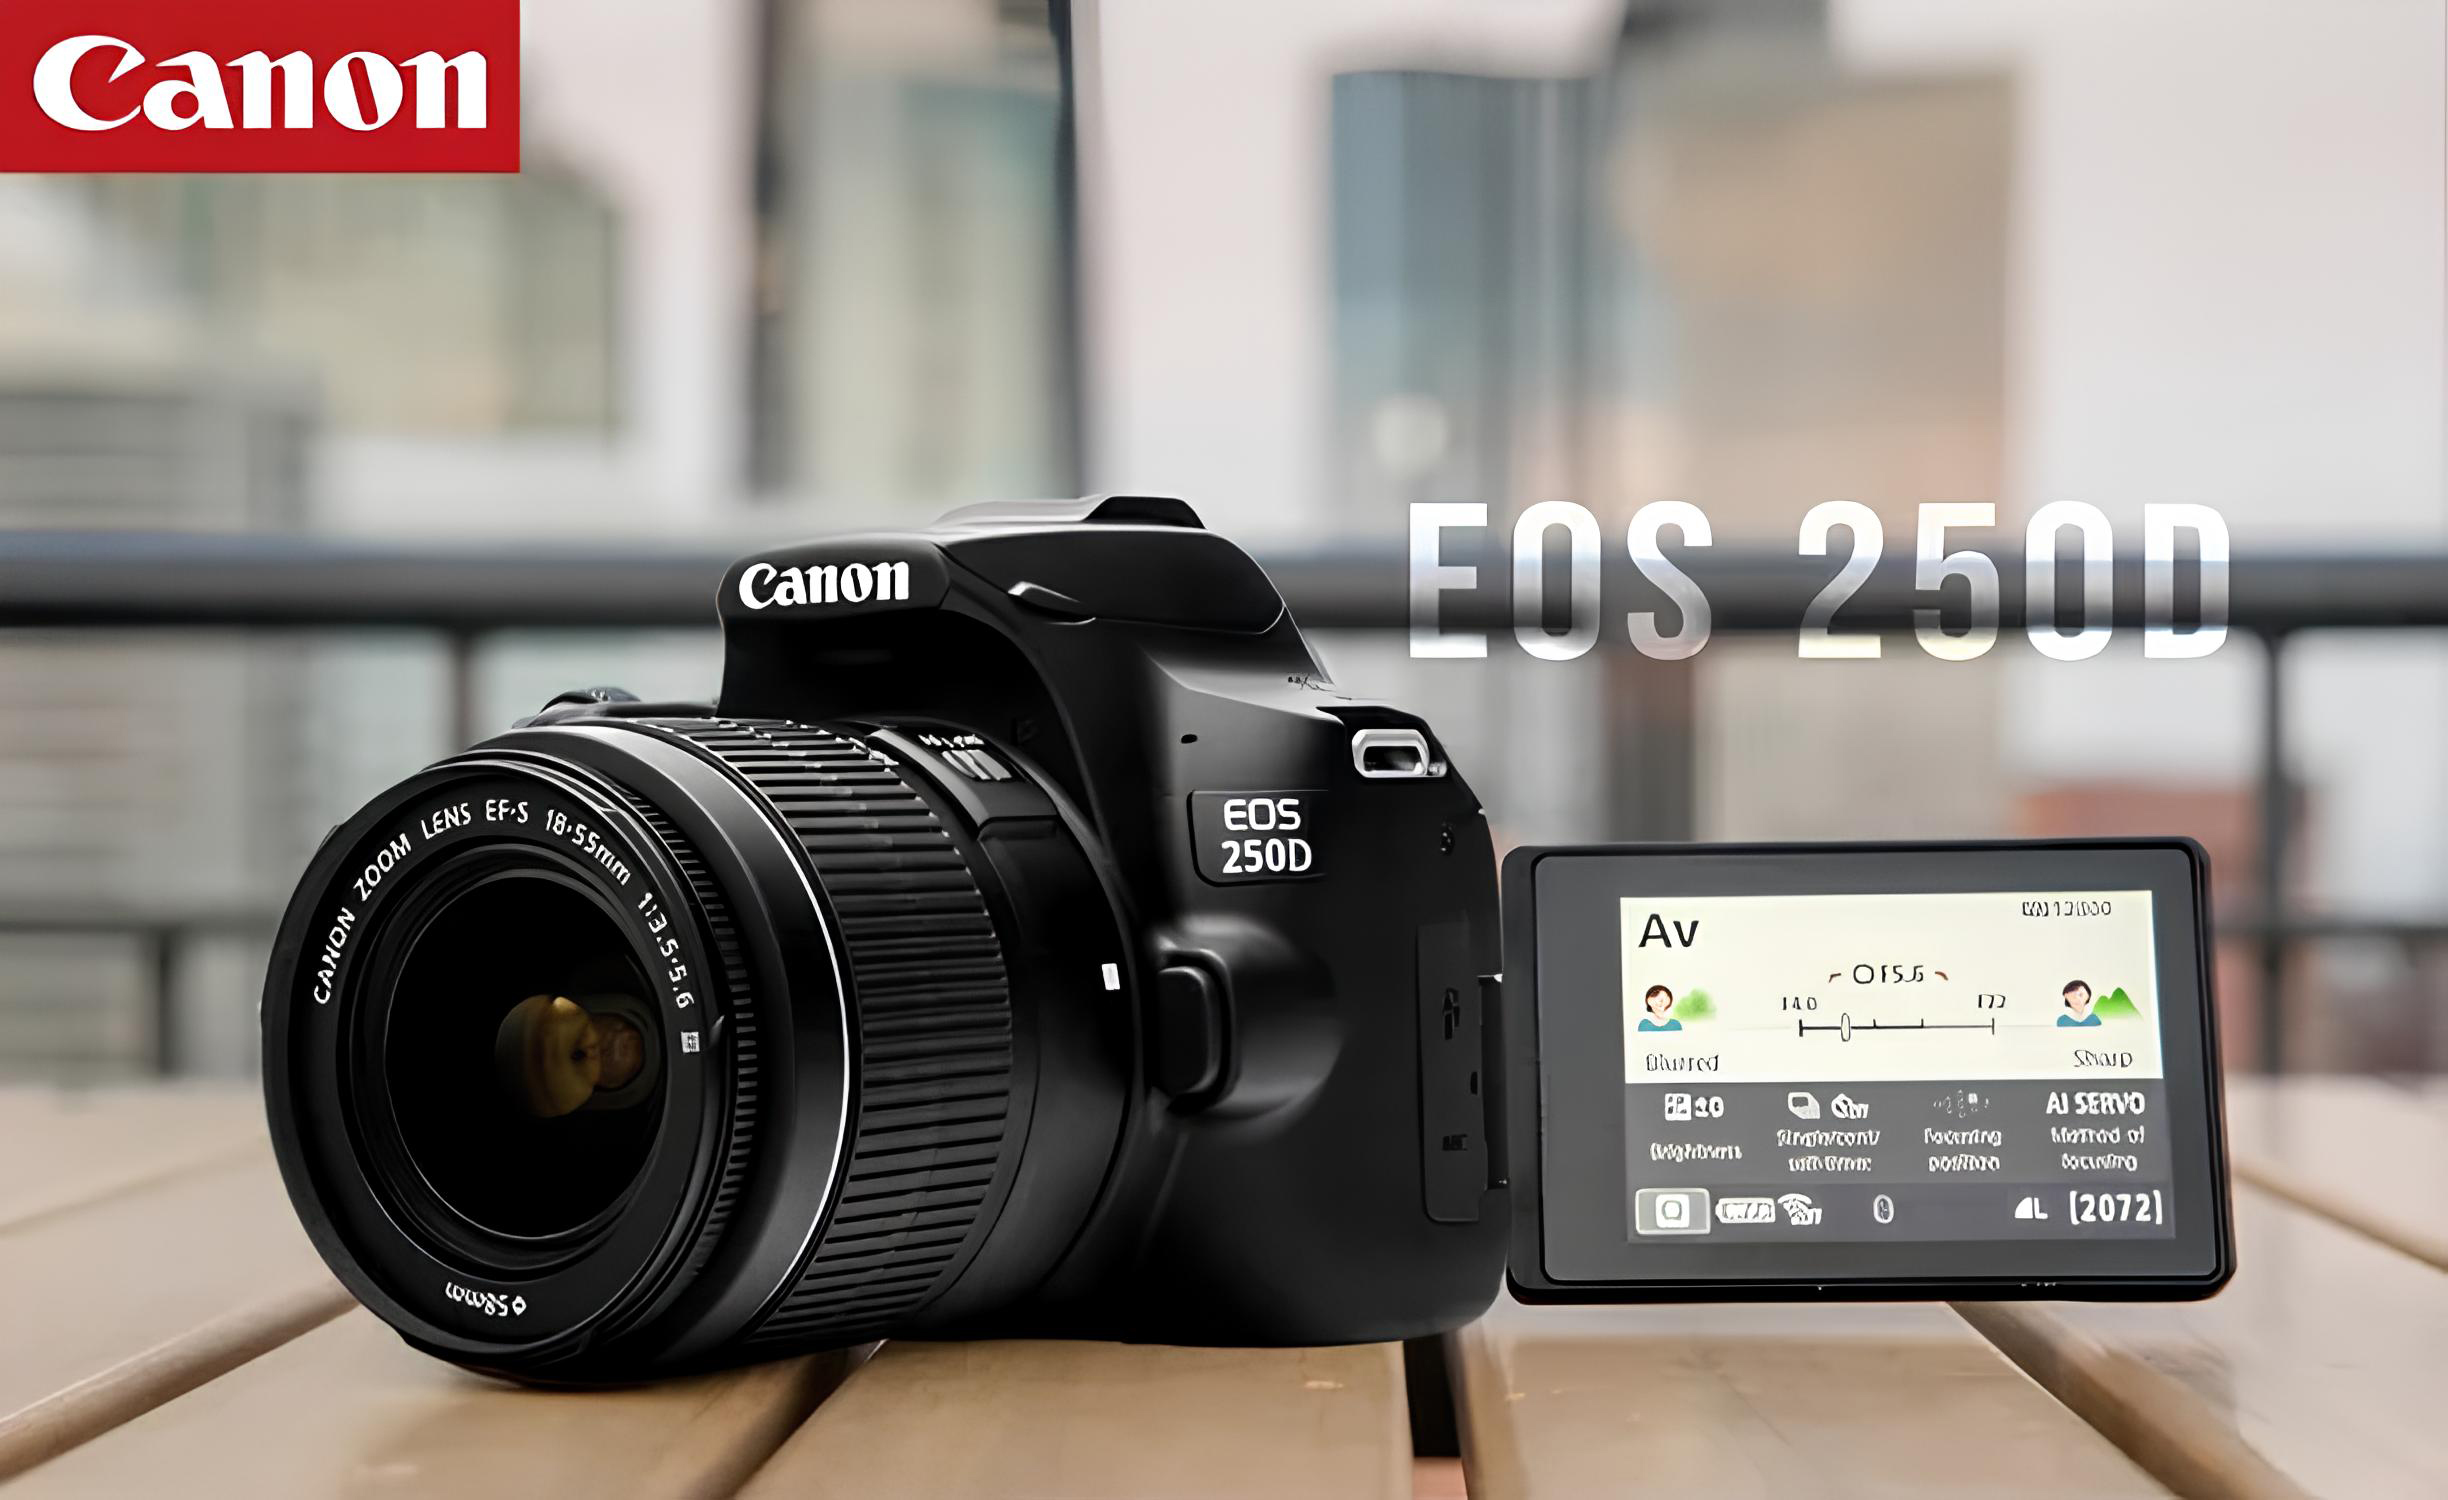 Canon EOS 250D / Rebel SL3 DSLR Camera with 18-55mm Lens (Black) + Creative Filter Set, EOS Camera Bag +  Sandisk Ultra 64GB Card + Electronics Cleaning Set, And More (International Model) - image 3 of 7